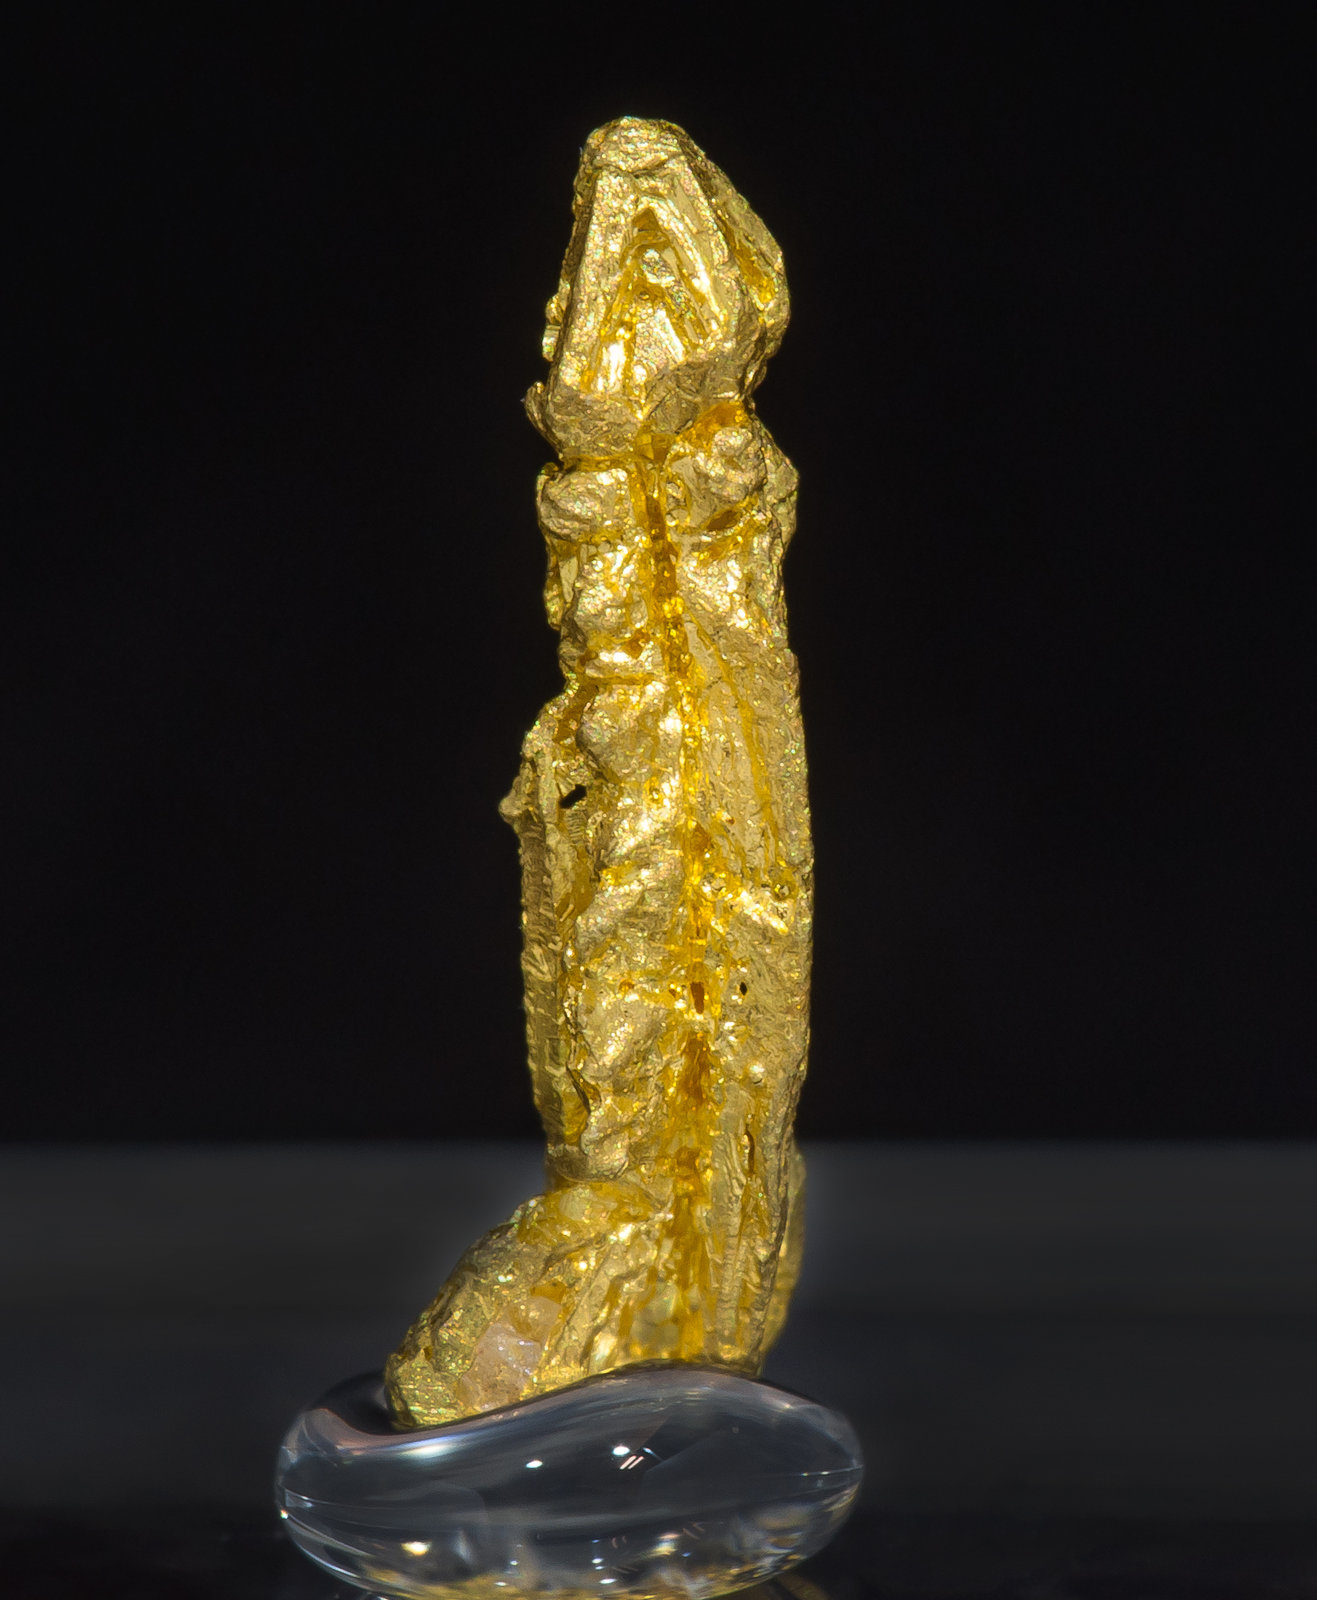 Gold (spinel twin) - Aouint Ighoman, Assa-Zag Province, Guelmim-Oued ...